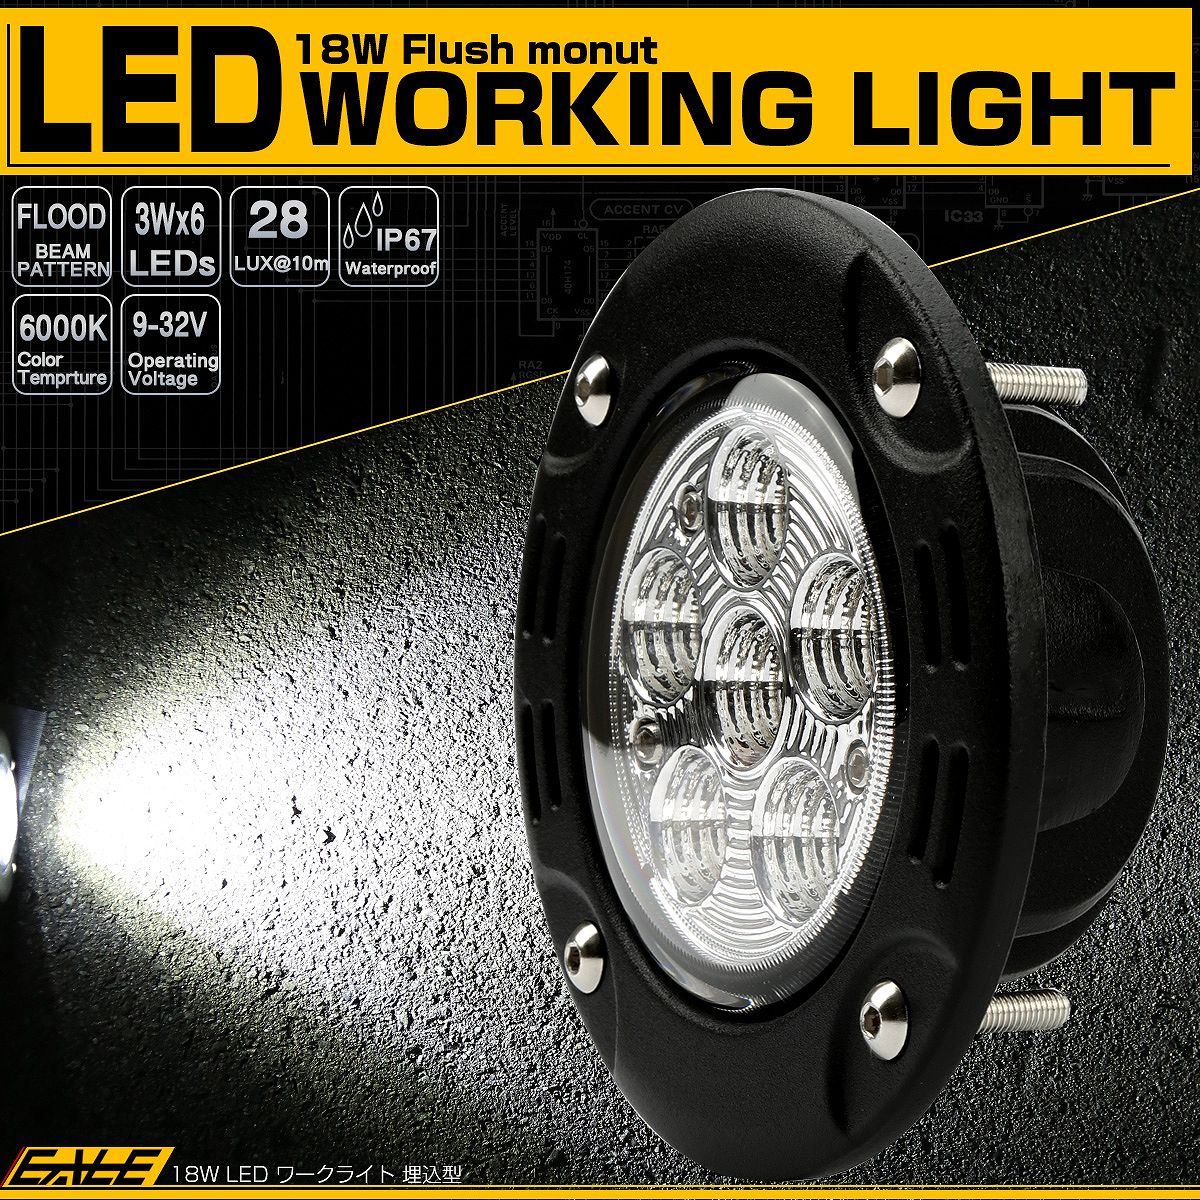 LED ワークライト 作業灯 埋め込み型 18W 丸型 フォグランプ バックランプ 補助灯 12V 24V 防水 IP67 P-549